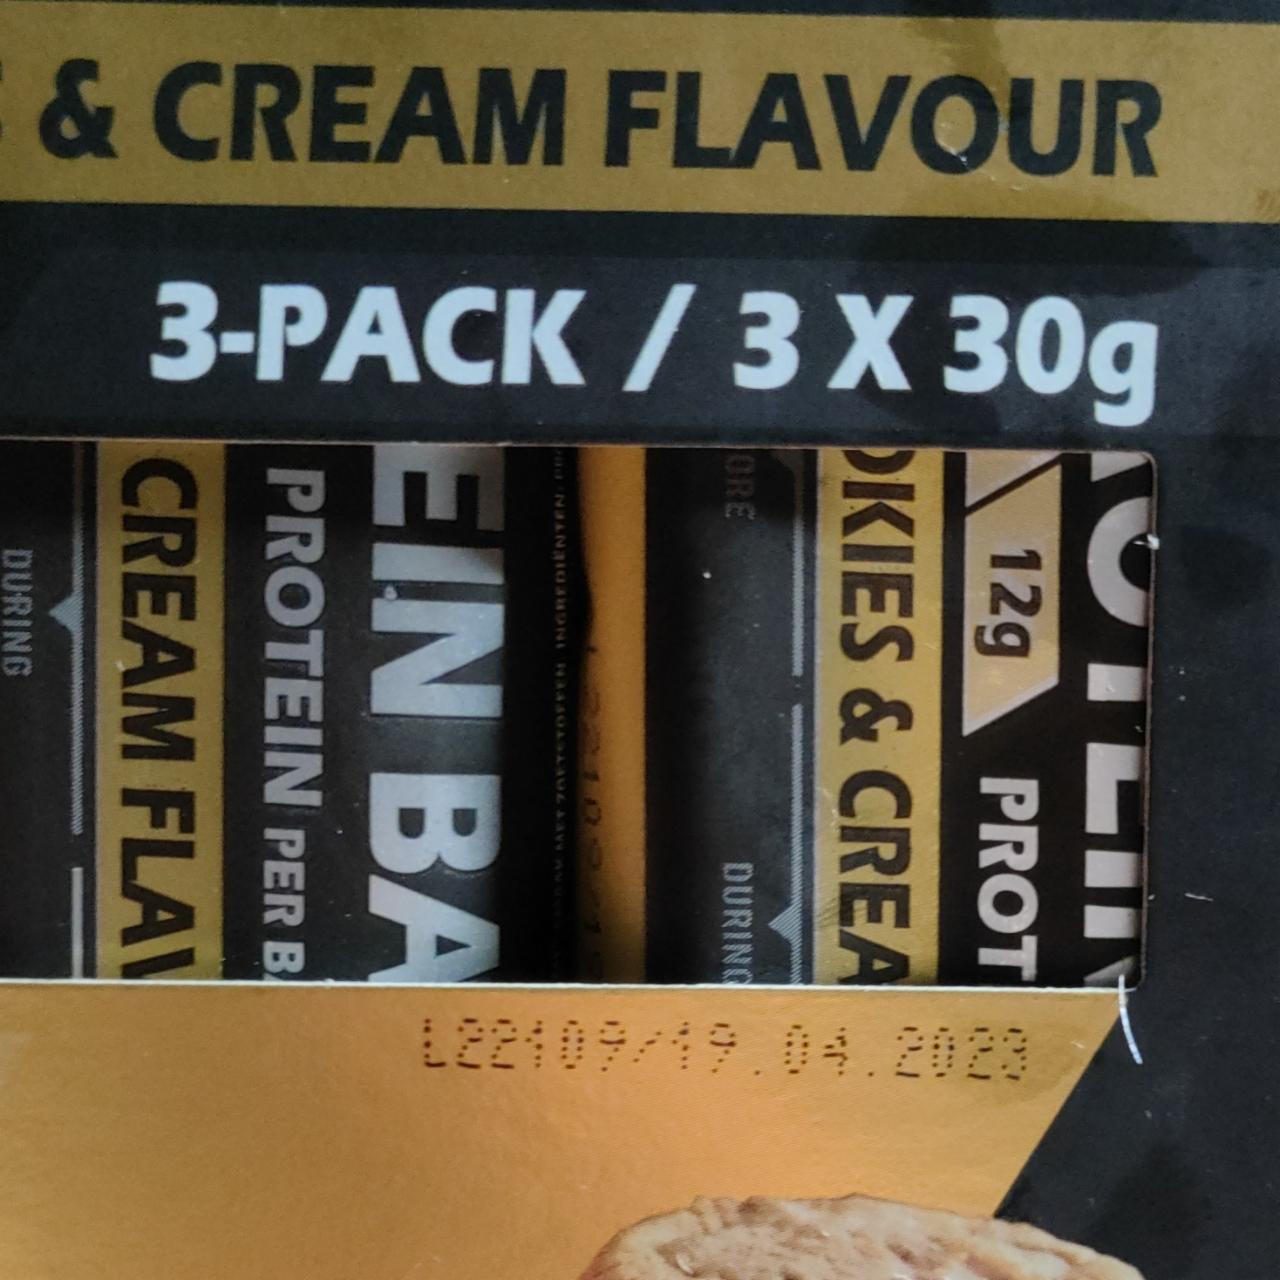 Zdjęcia - Cookies&cream flavour Protein bar